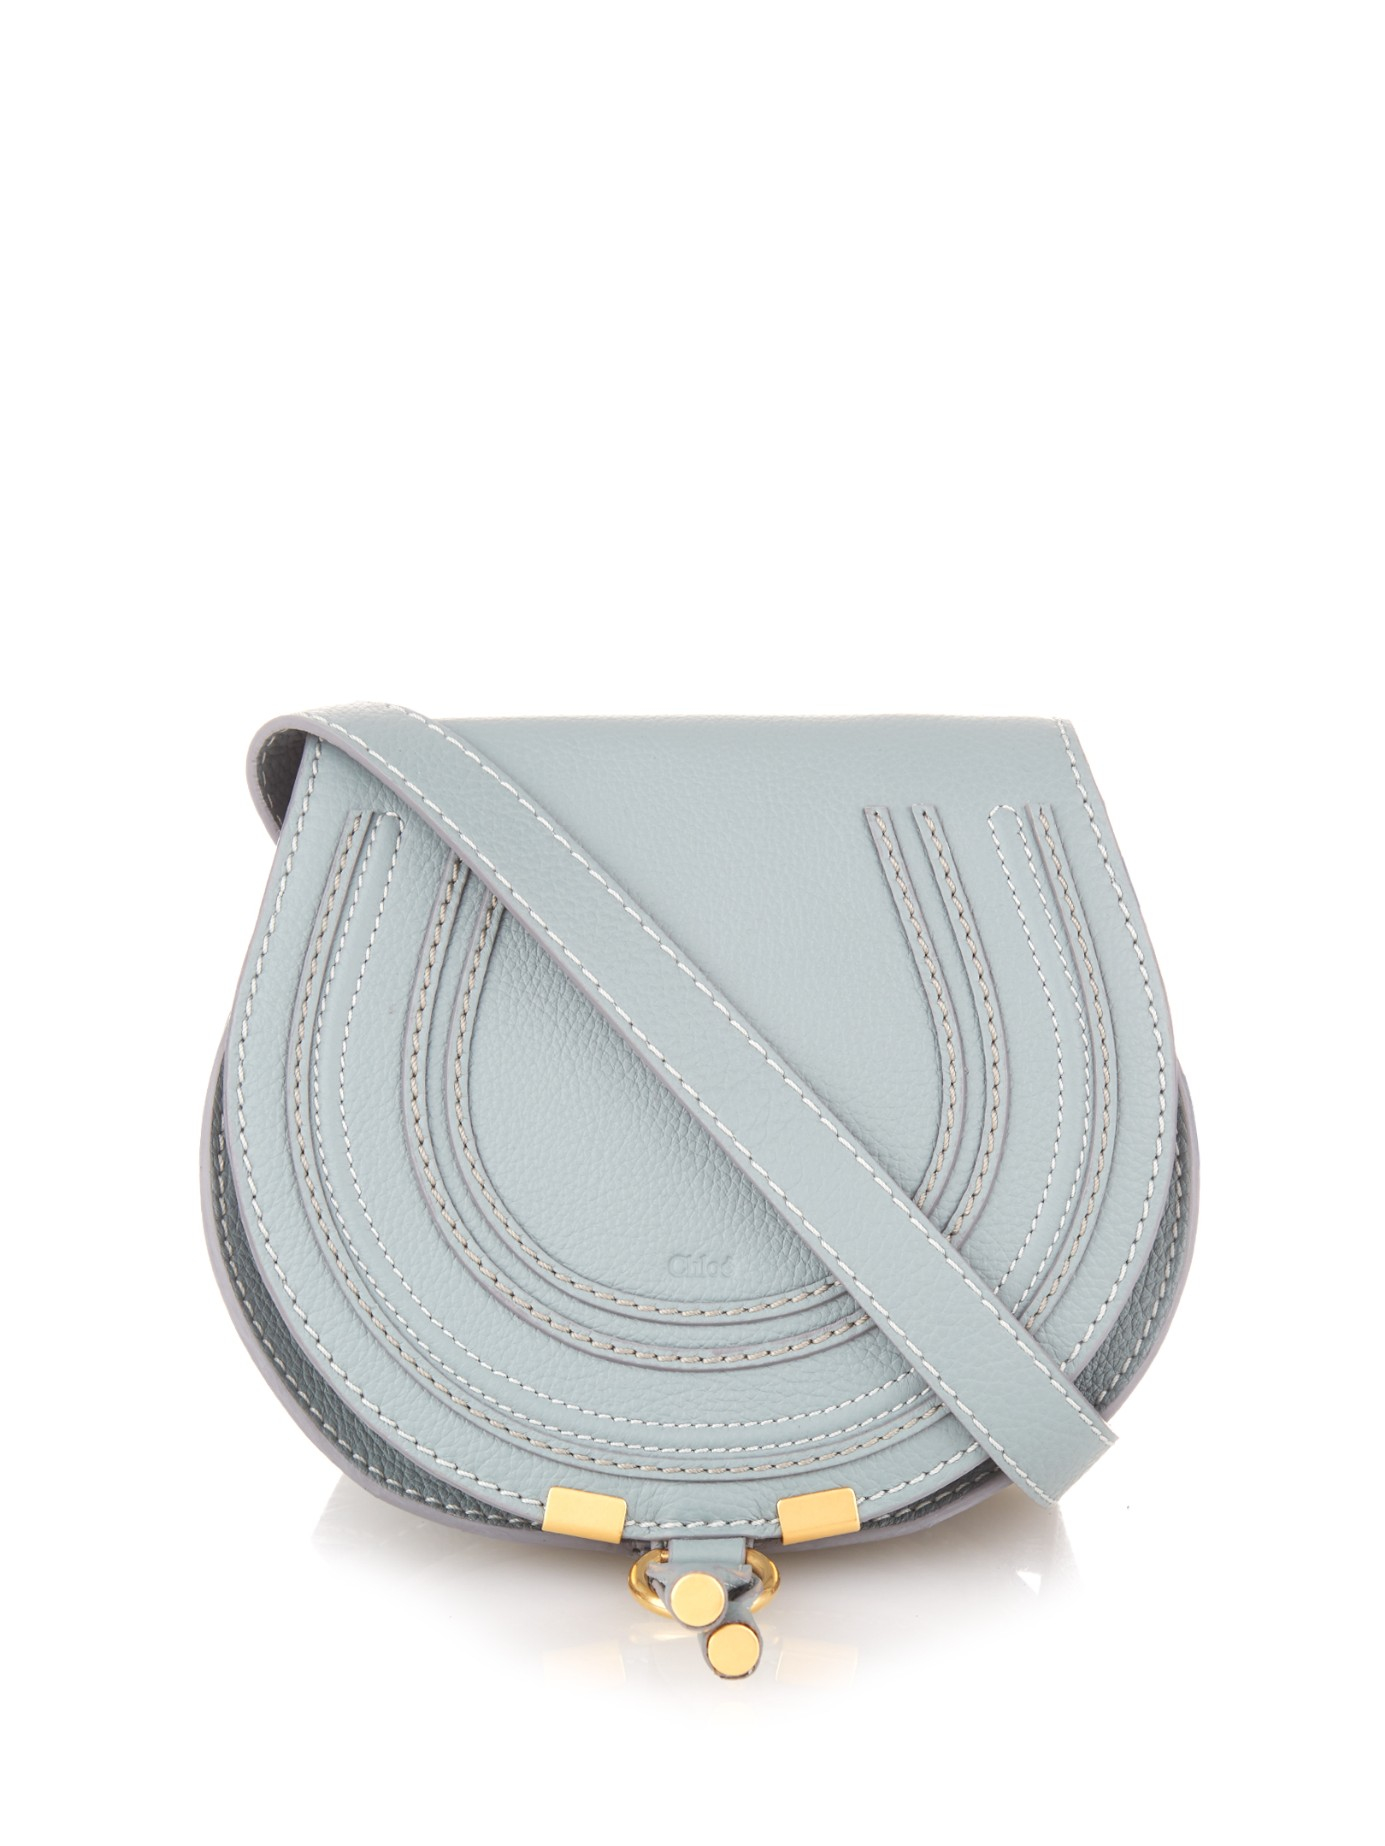 Chloé Marcie Mini Leather Cross-body Bag in Blue | Lyst